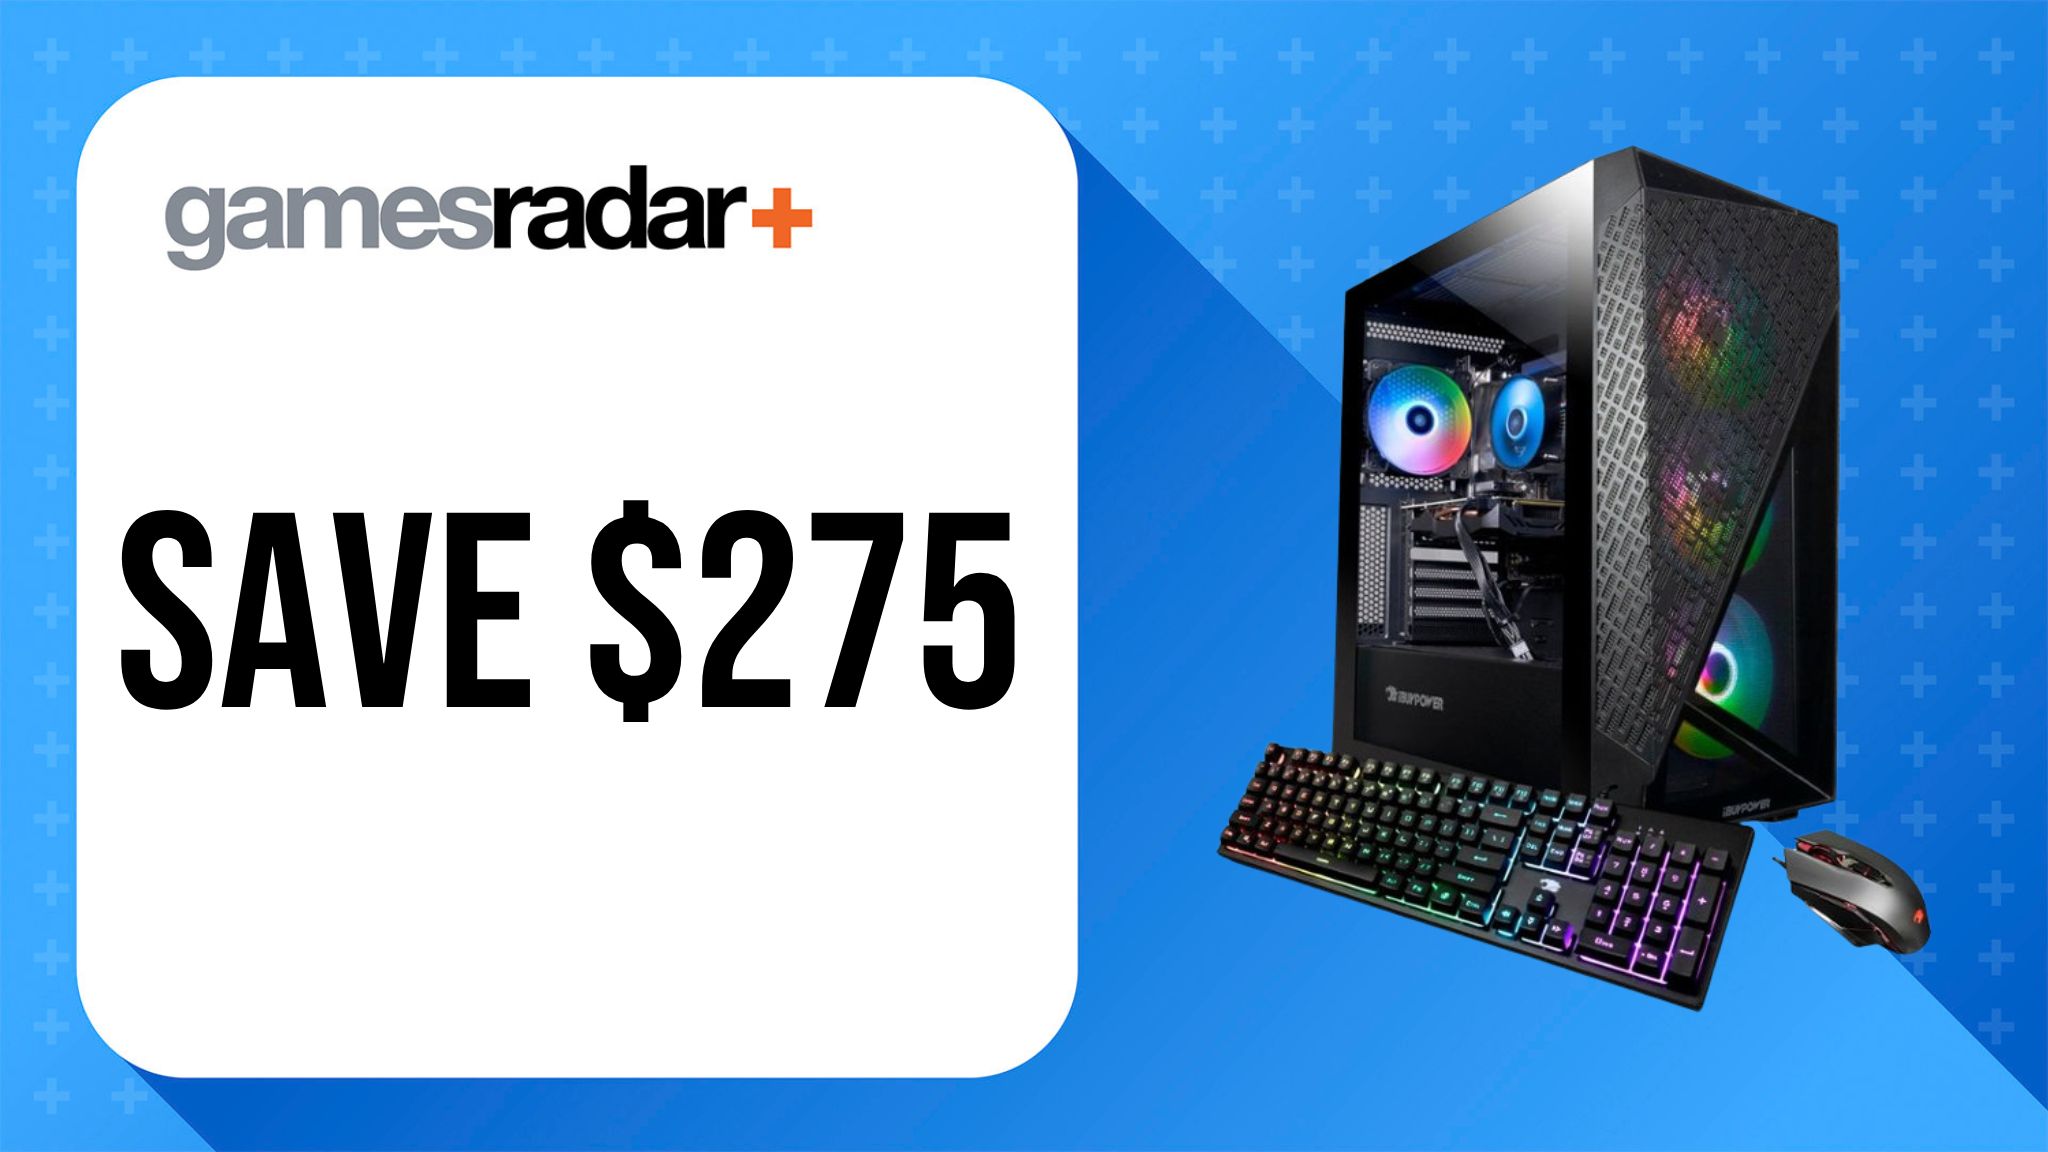 iBUYPOWER SlateMESH Gaming Desktop deal image with $275 saving stamp and blue background